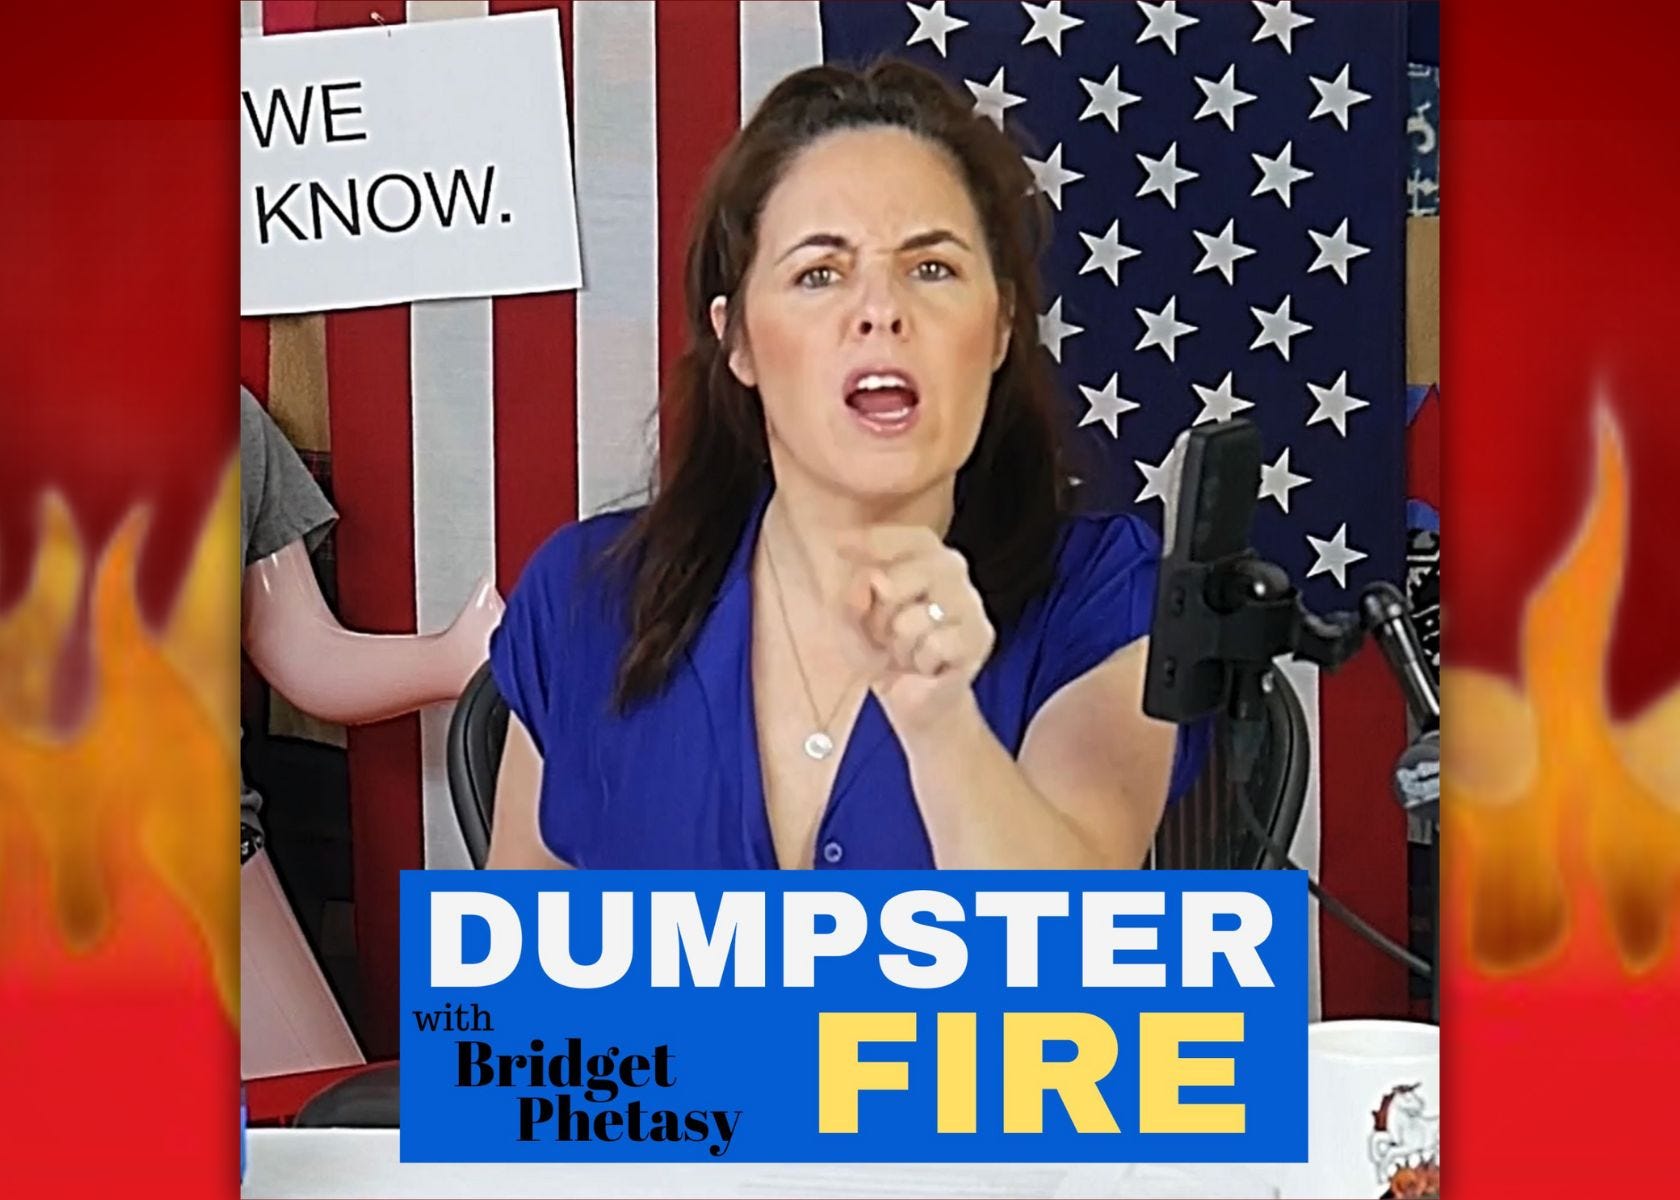 Dumpster Fire Is A False Flag